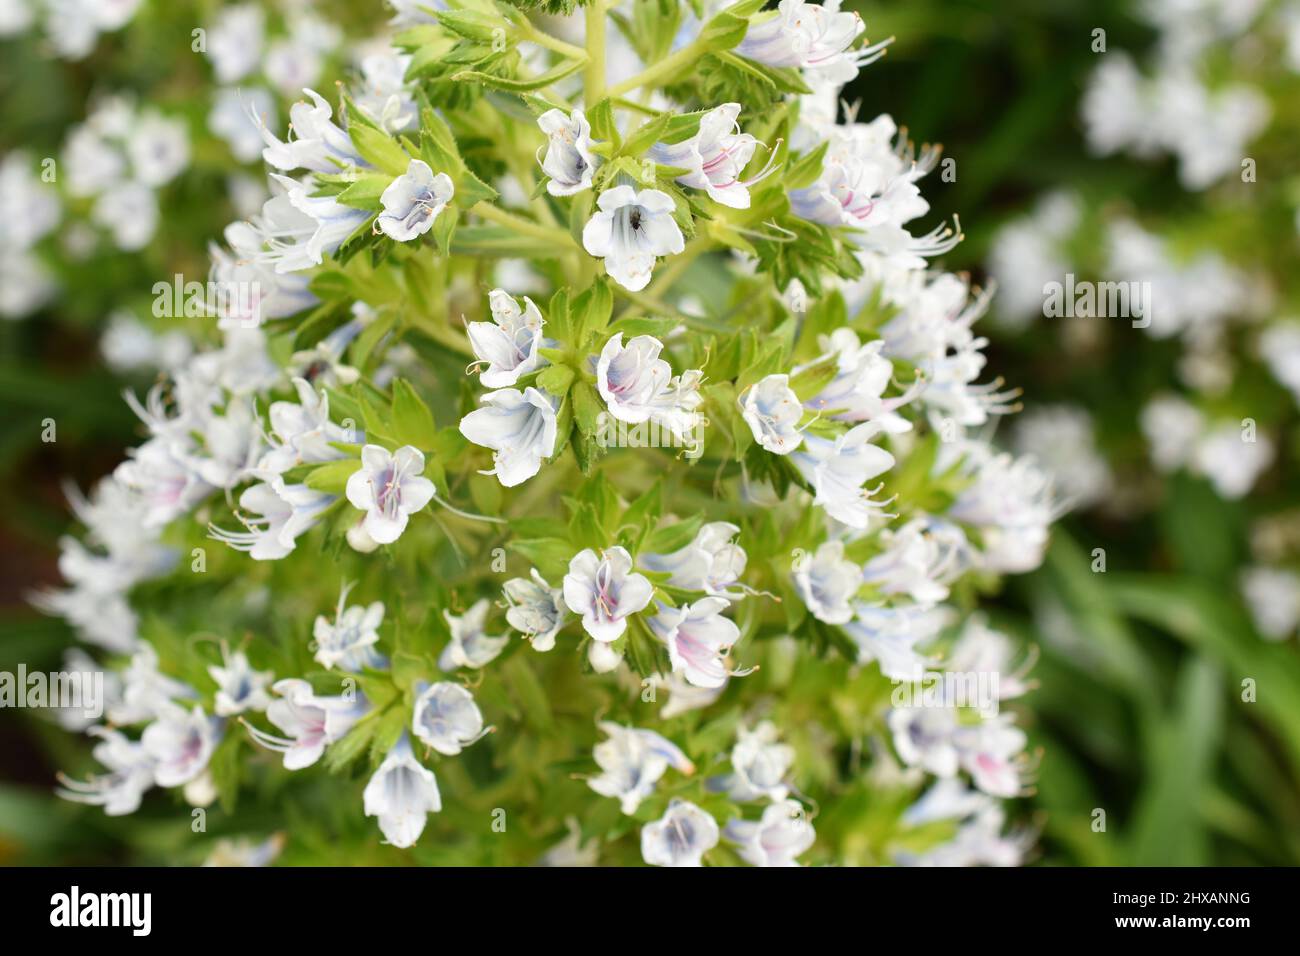 Closeup on the flowers of the shrubby perennial plant Echium decaisnei Stock Photo